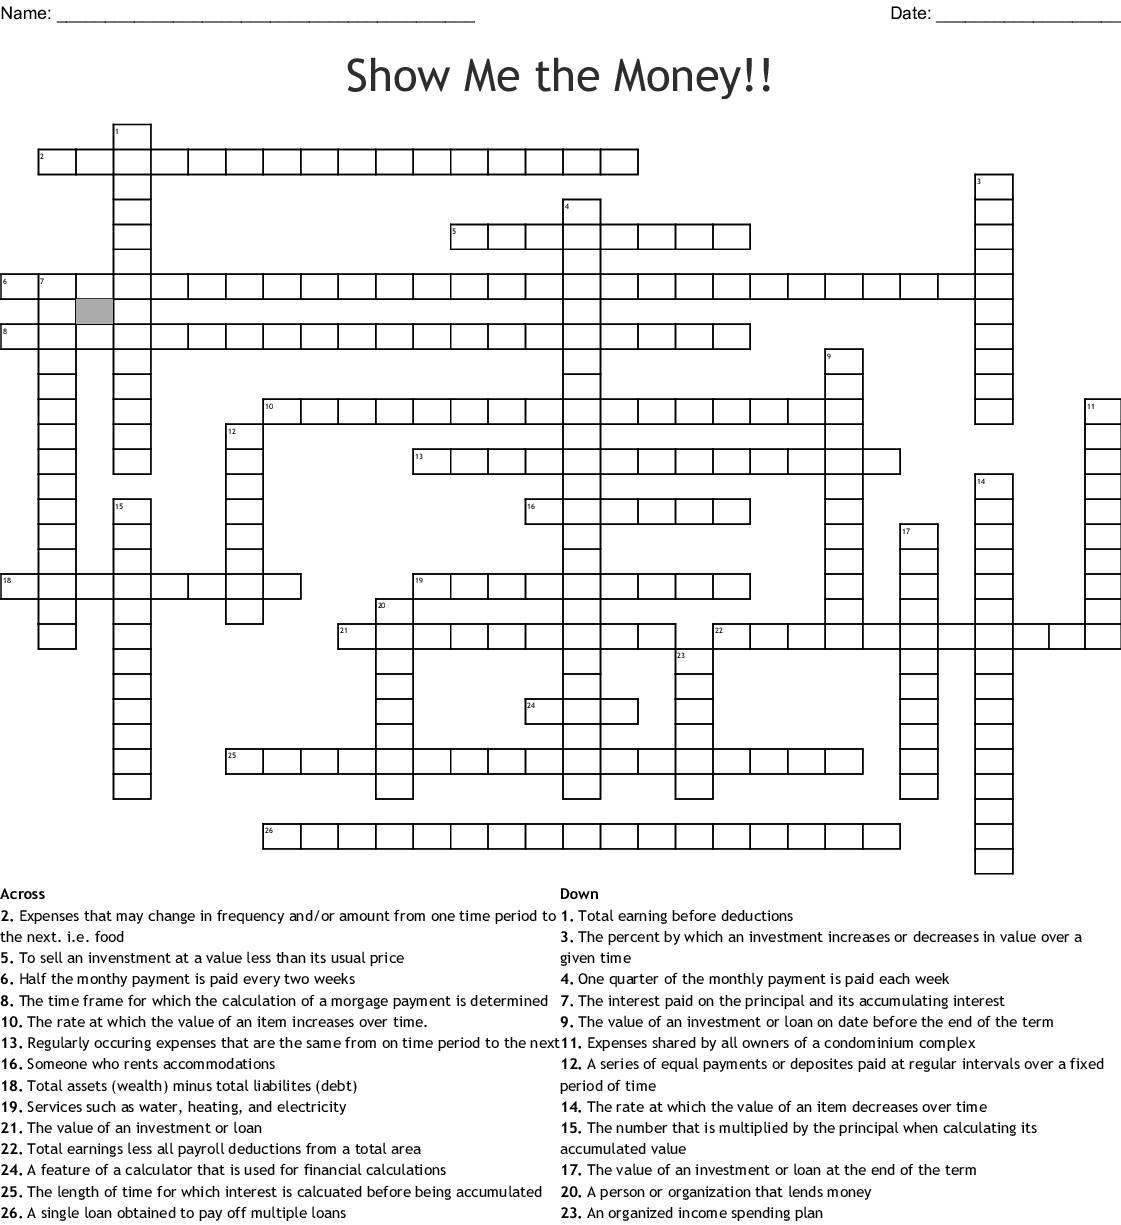 Easy Money Crossword Easycrosswordpuzzlesprintable com